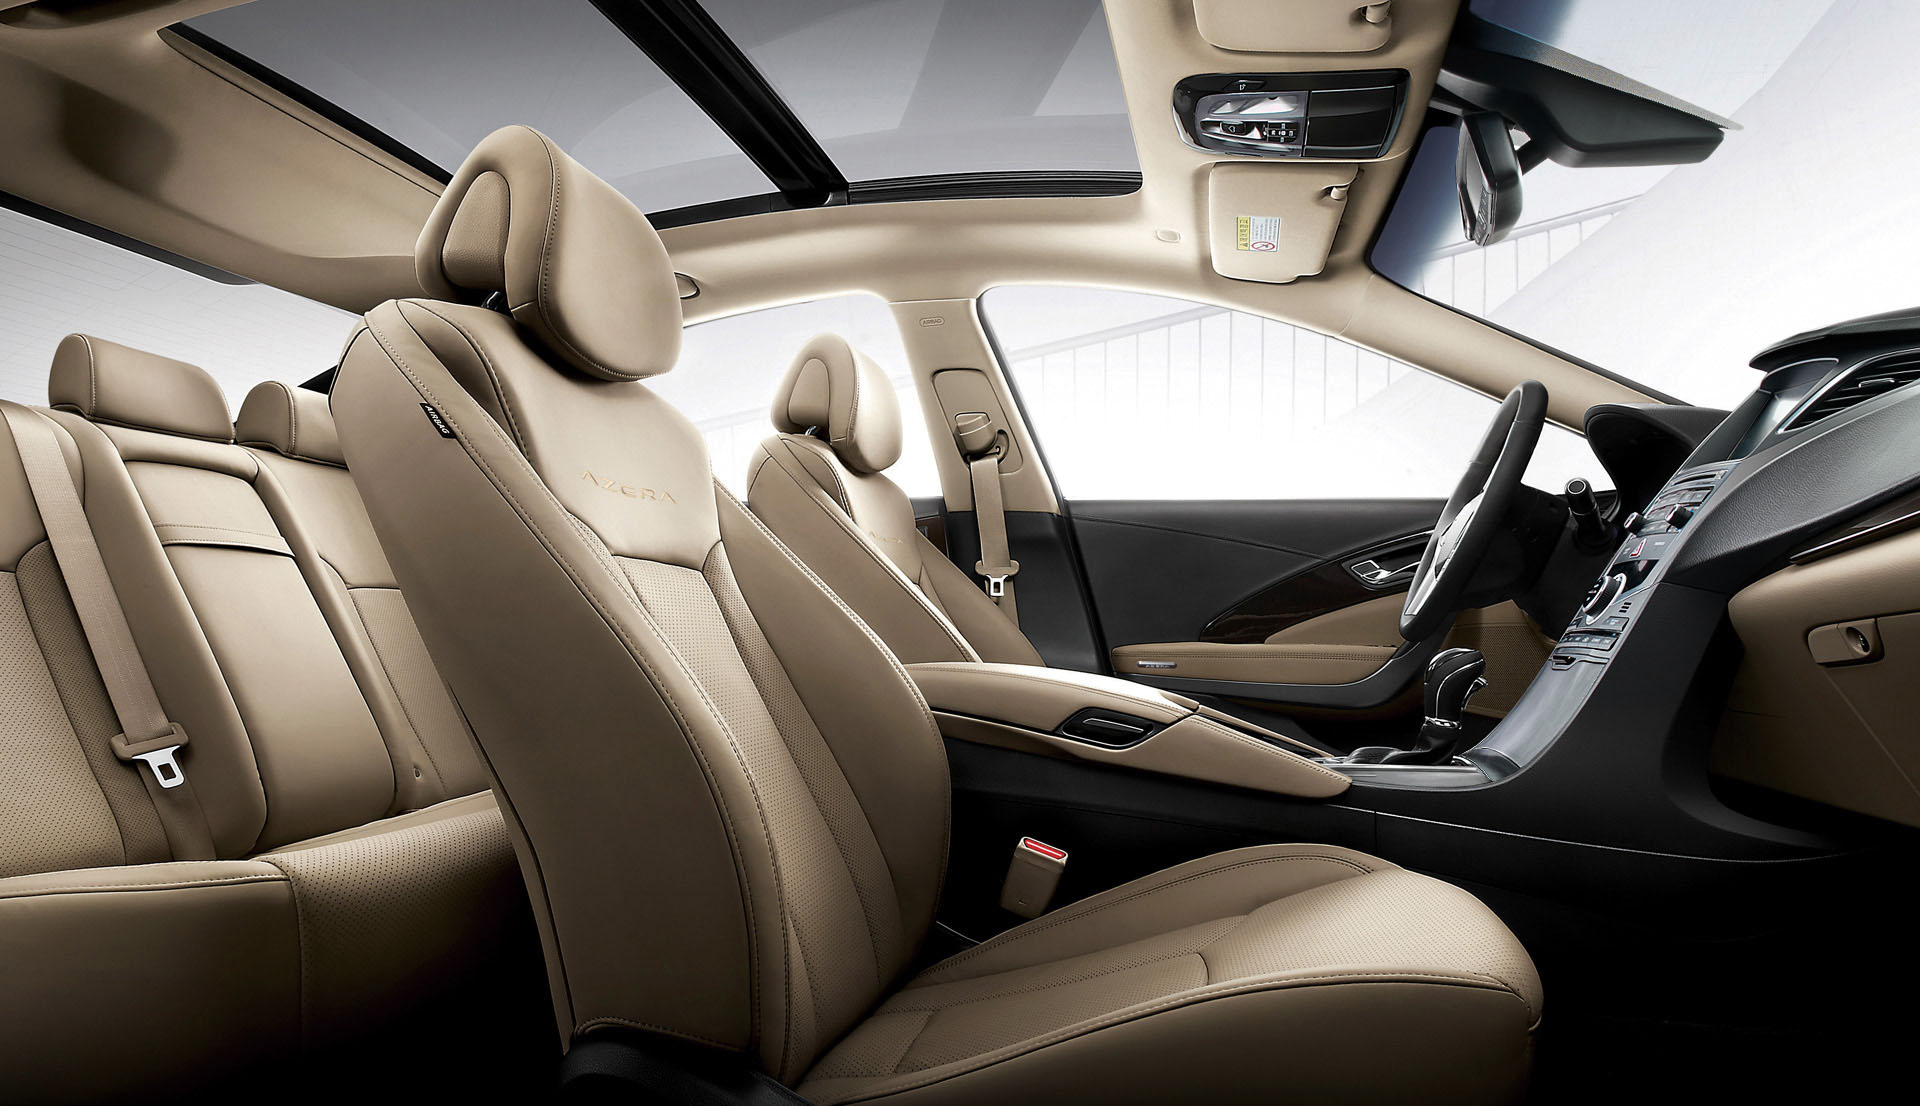 Hyundai Azera SE Manual Interior seats